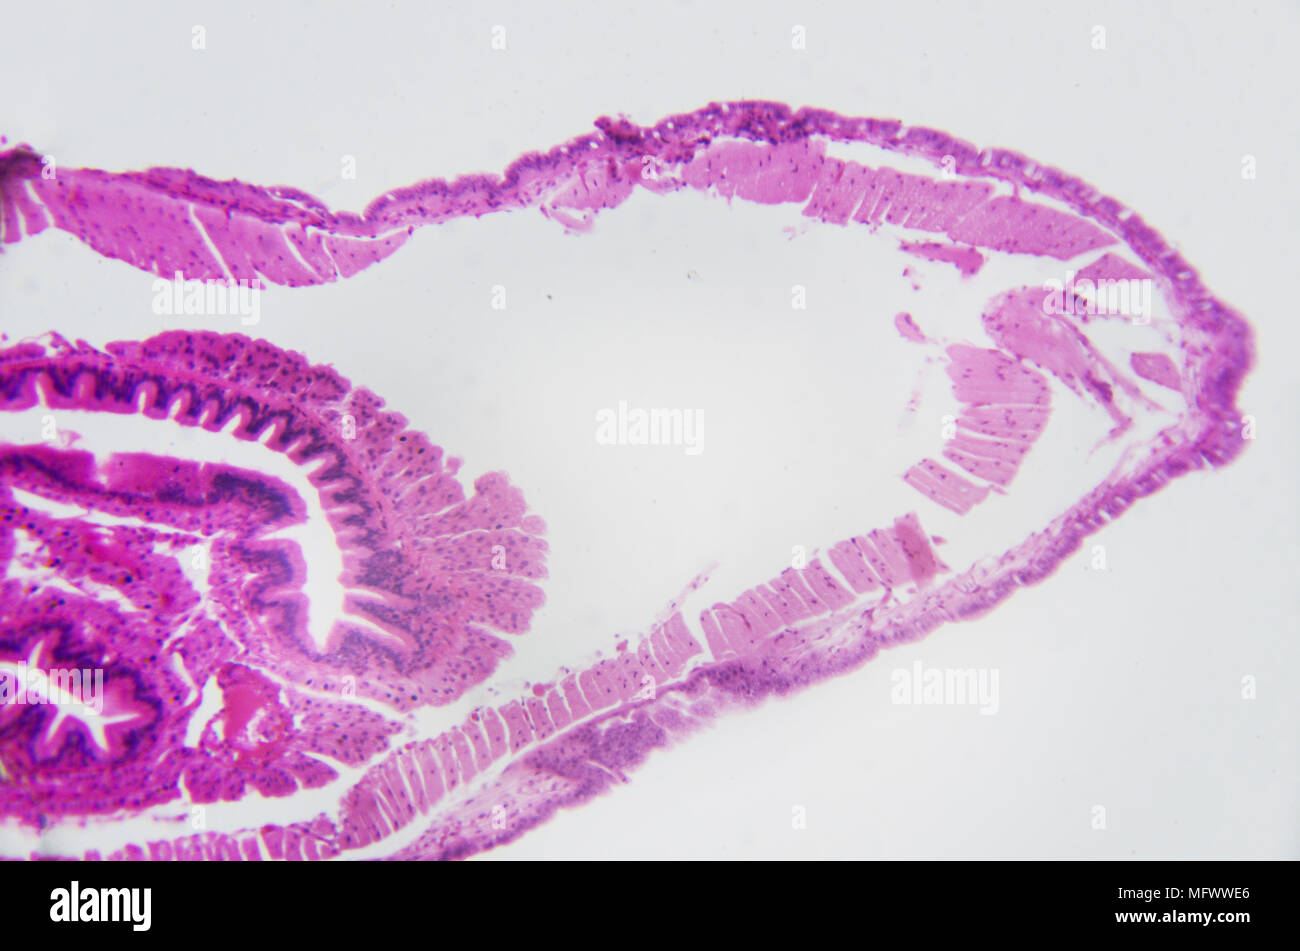 Microscopic photography. Earthworm, transversal section. Stock Photo